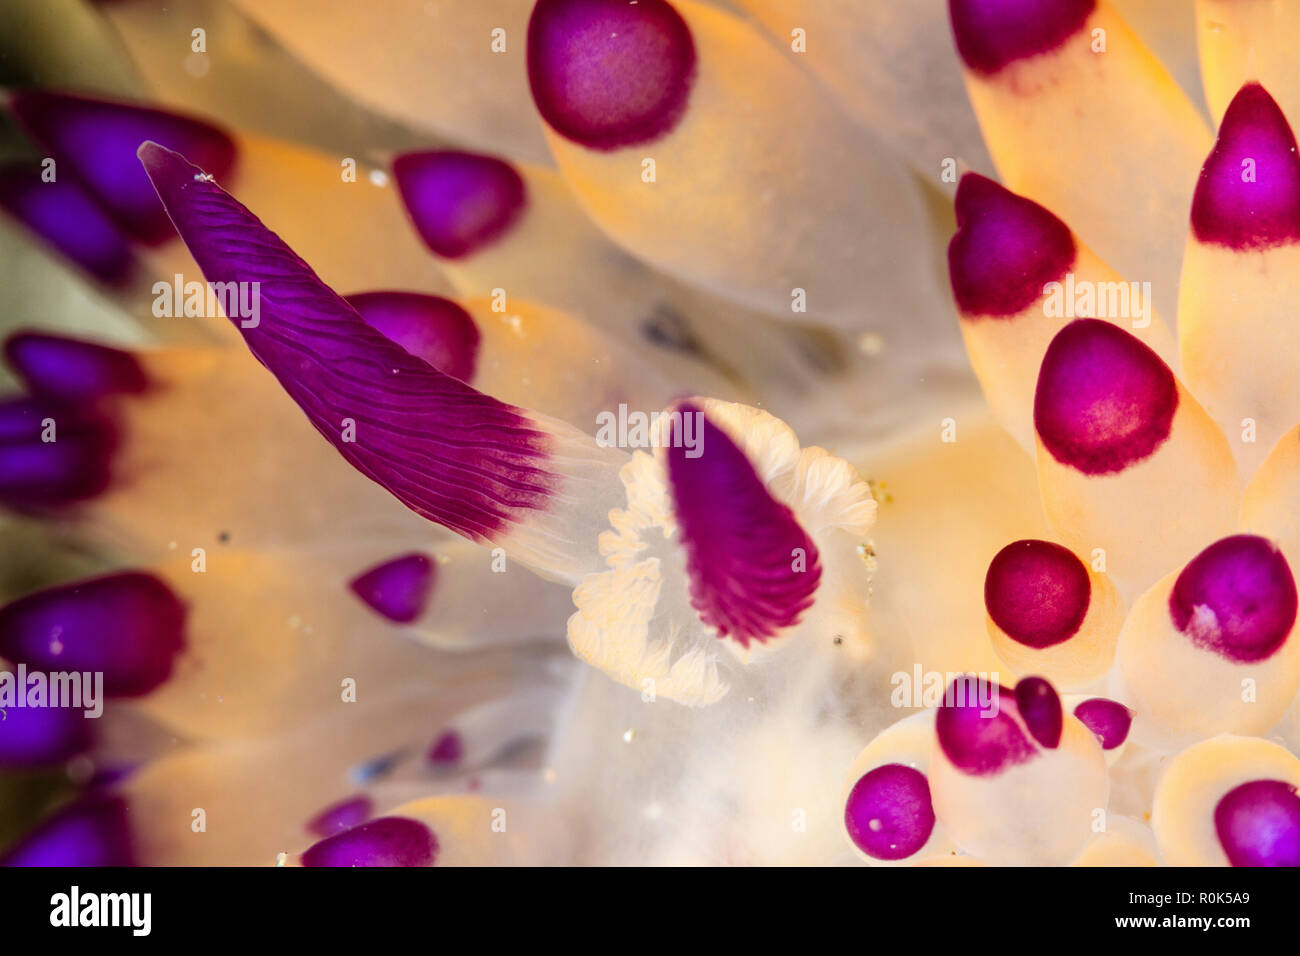 Close-up of the rhinophores of a Janolus savinkini nudibranch. Stock Photo